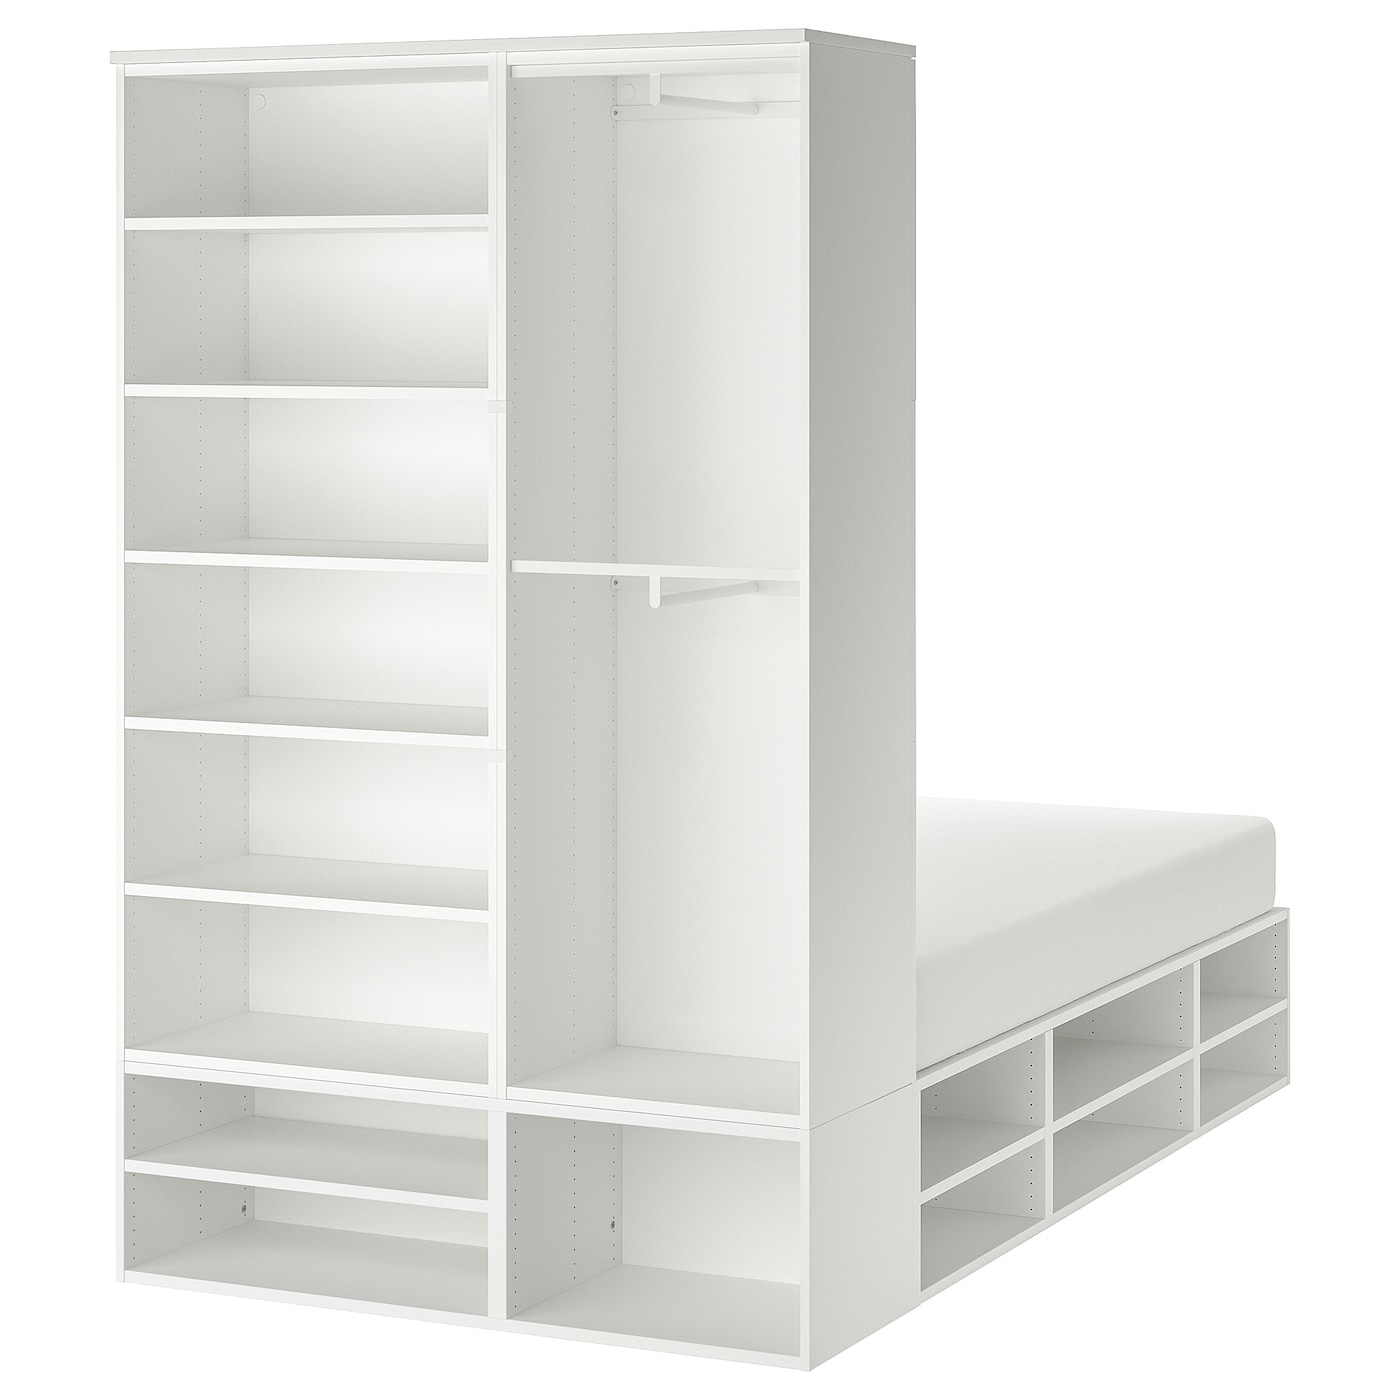 Комплект мебели д/спальни  - IKEA PLATSA, 43x244x140см, белый, ПЛАТСА ИКЕА